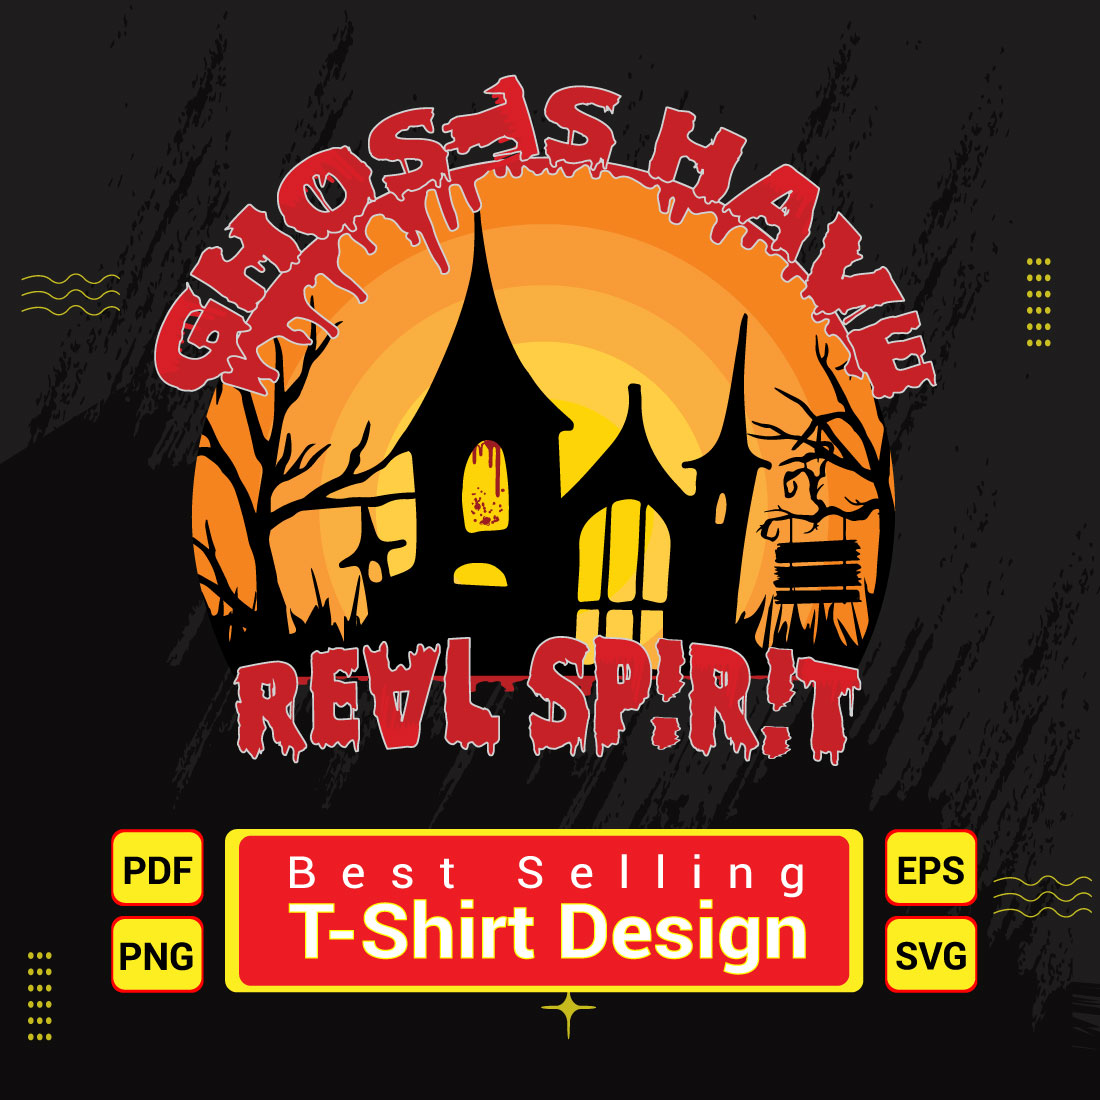 T-shirt Design Ghosts Have Real Spirit main image.